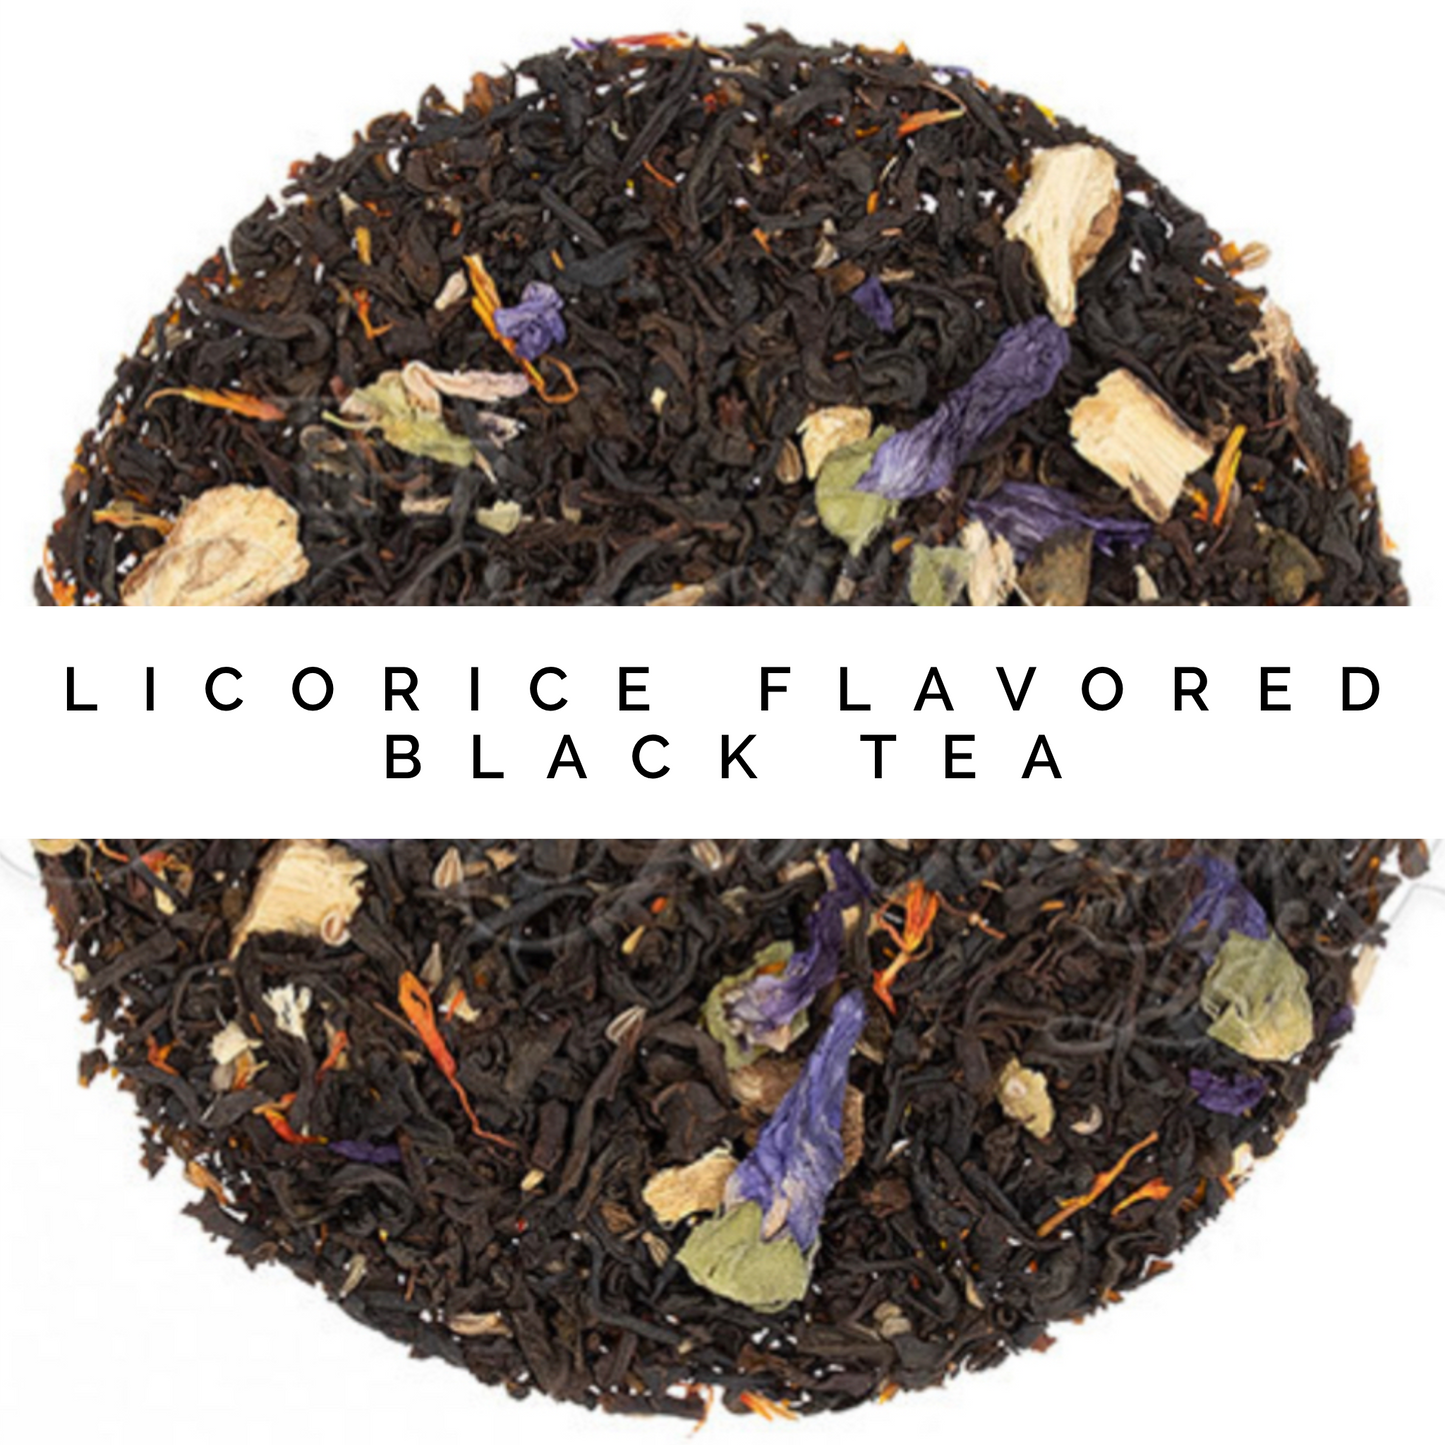 Licorice flavored Black Tea